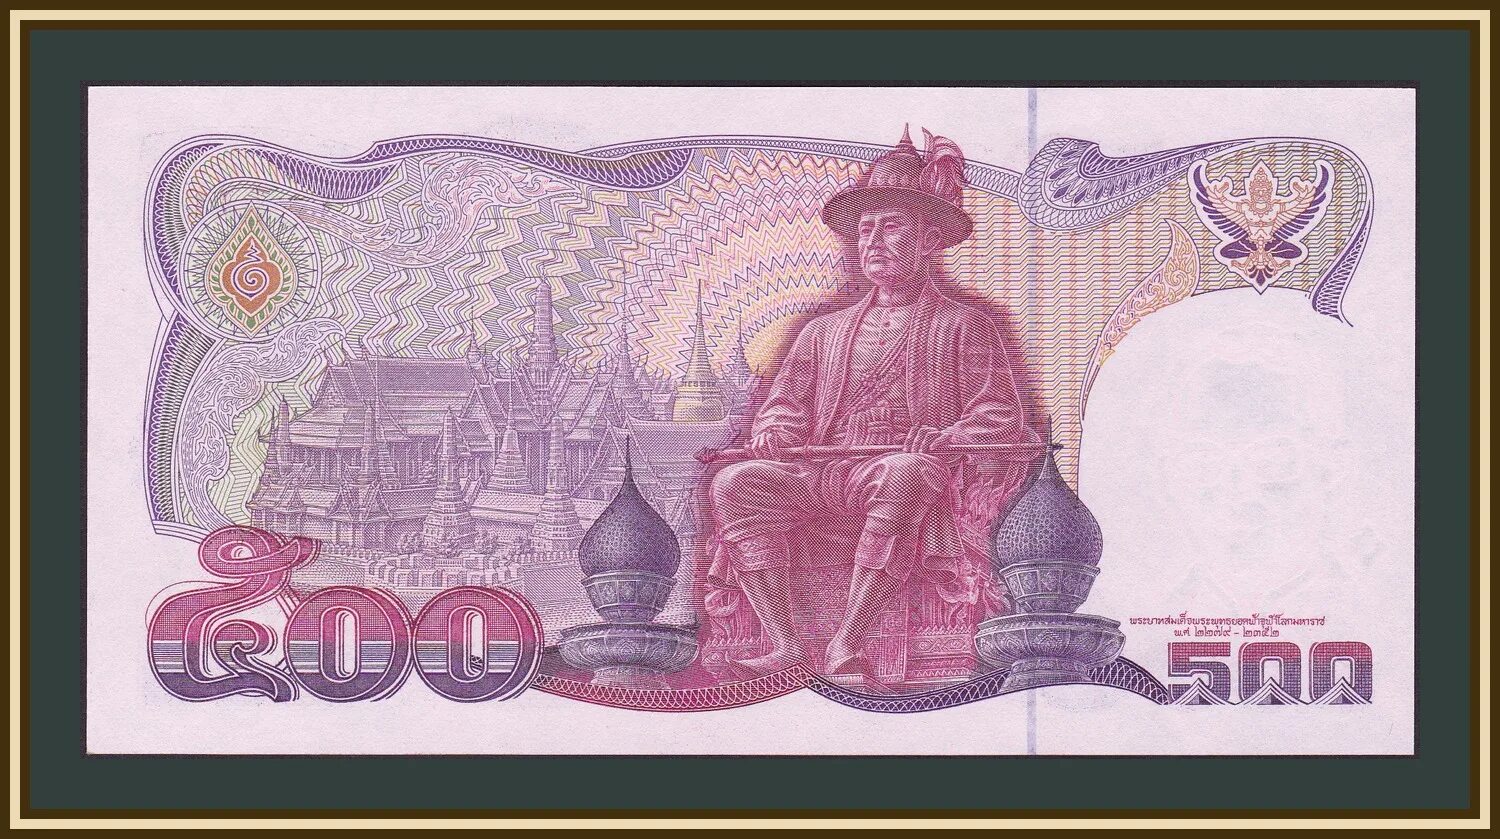 500 Бат Тайланд. Тайланд банкнота 500 бат. Тайские купюры 500 Батов. Тайские деньги 500 бат. 500 бат